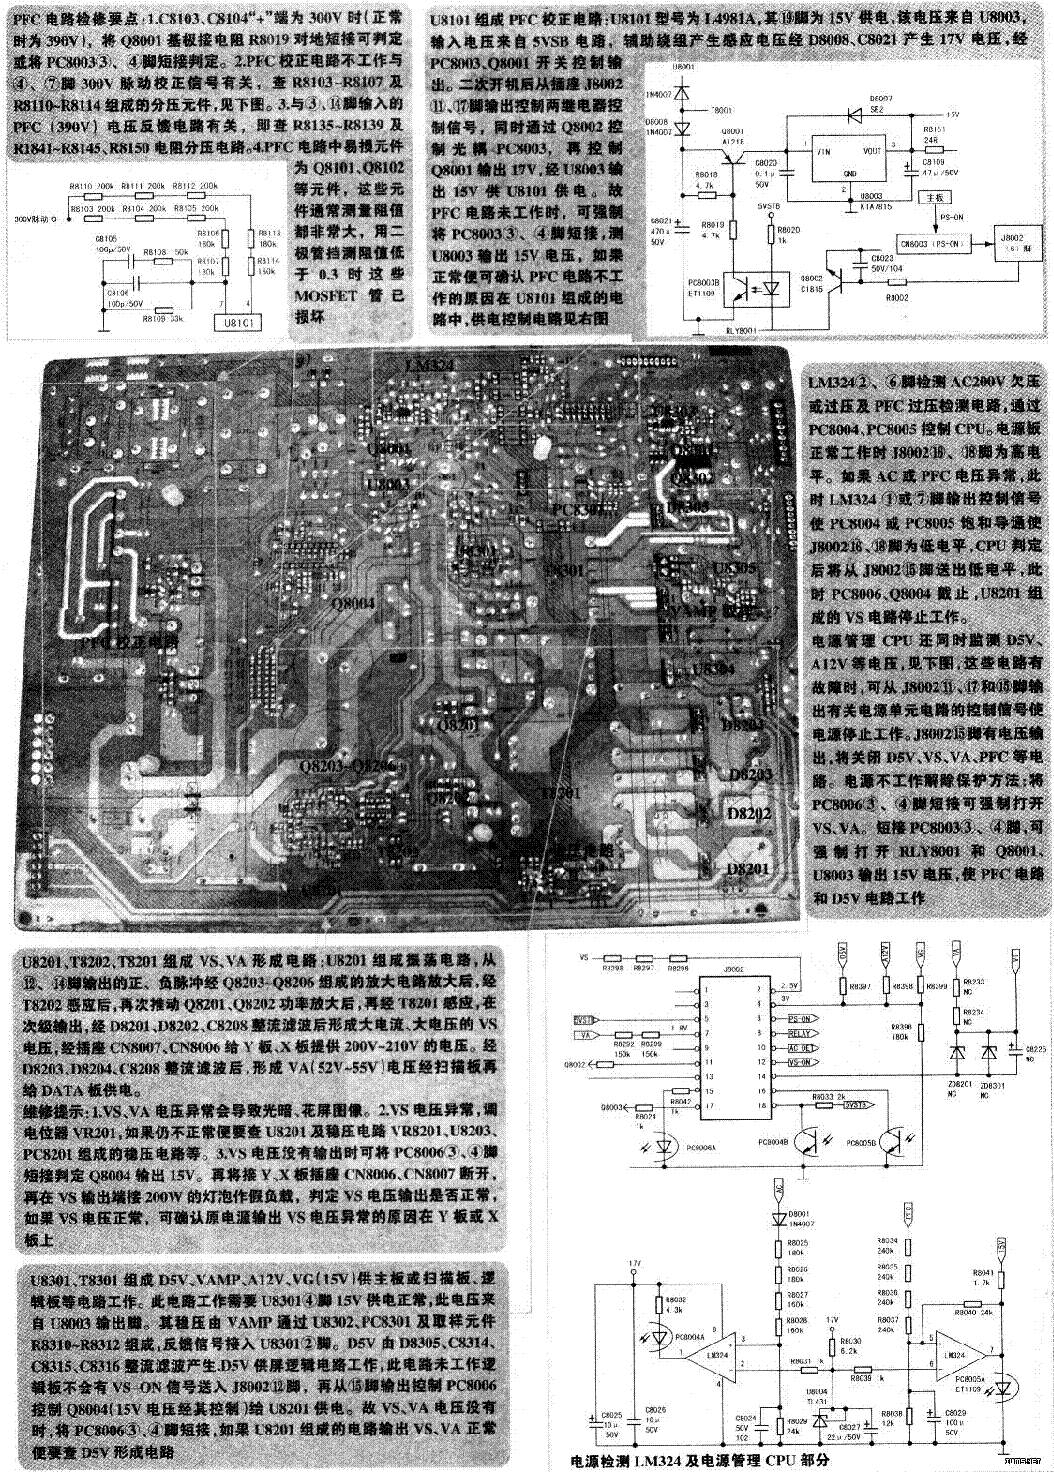 SAMSUNG PS-42W3-STD LJ41-05700A LJ92-01555 SCH service manual (2nd page)